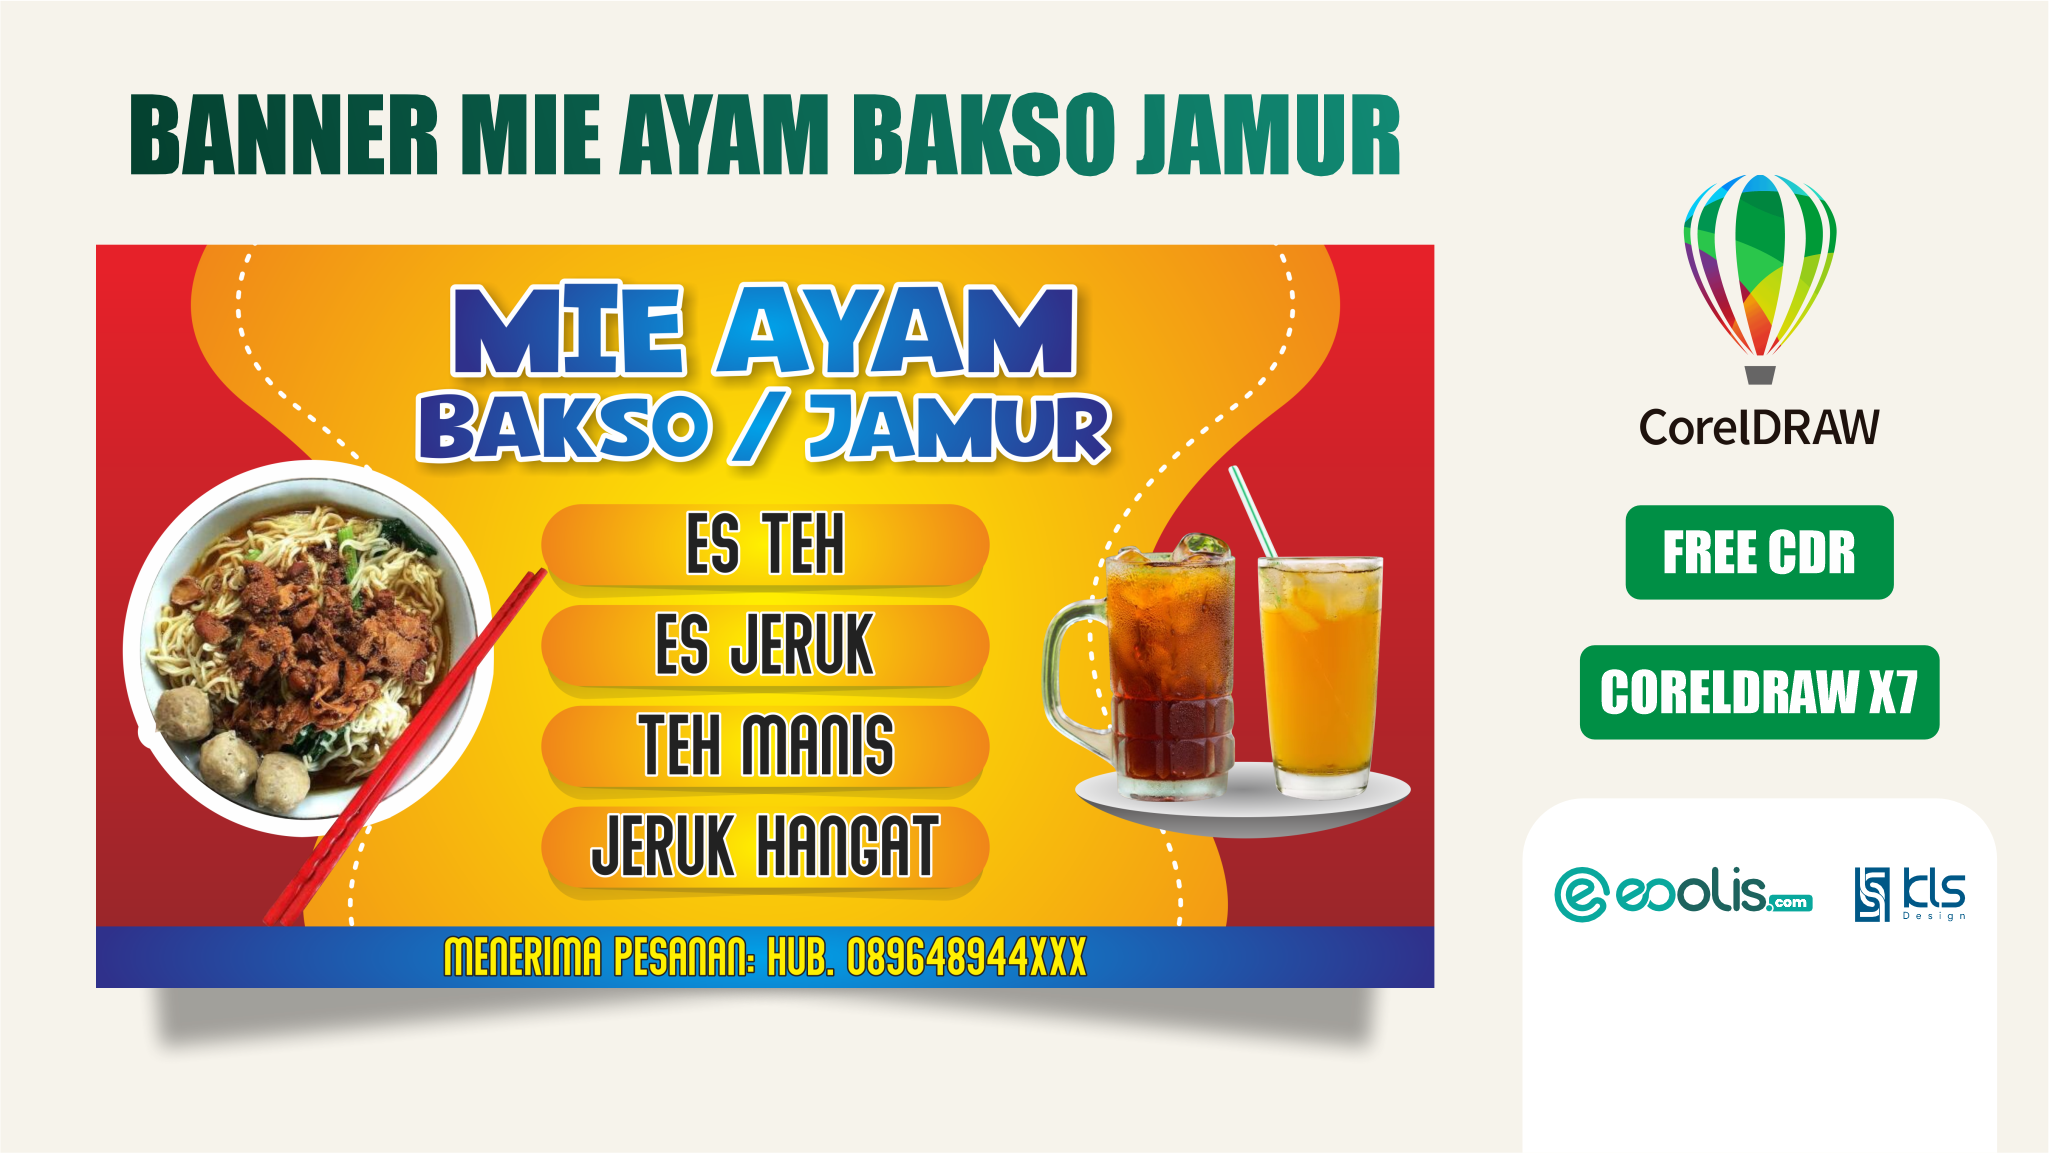 Desain Banner Mie Ayam Bakso Jamur CorelDraw X7 eoolis.com